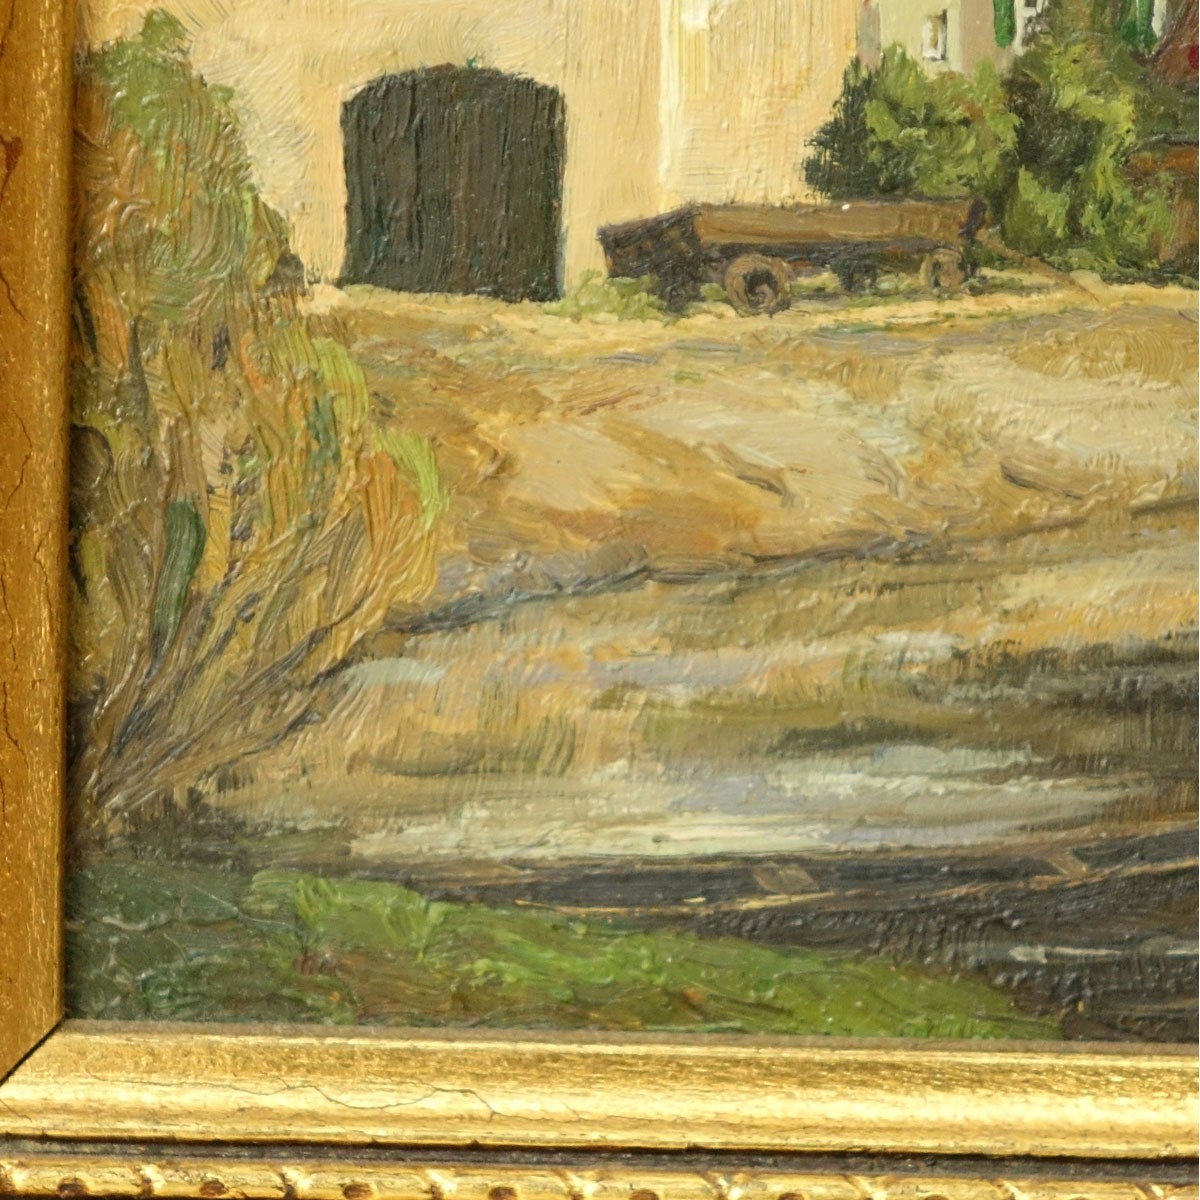 20th Century Oil on Board, Landscape Scene, Signed Lower Right. Good condition.